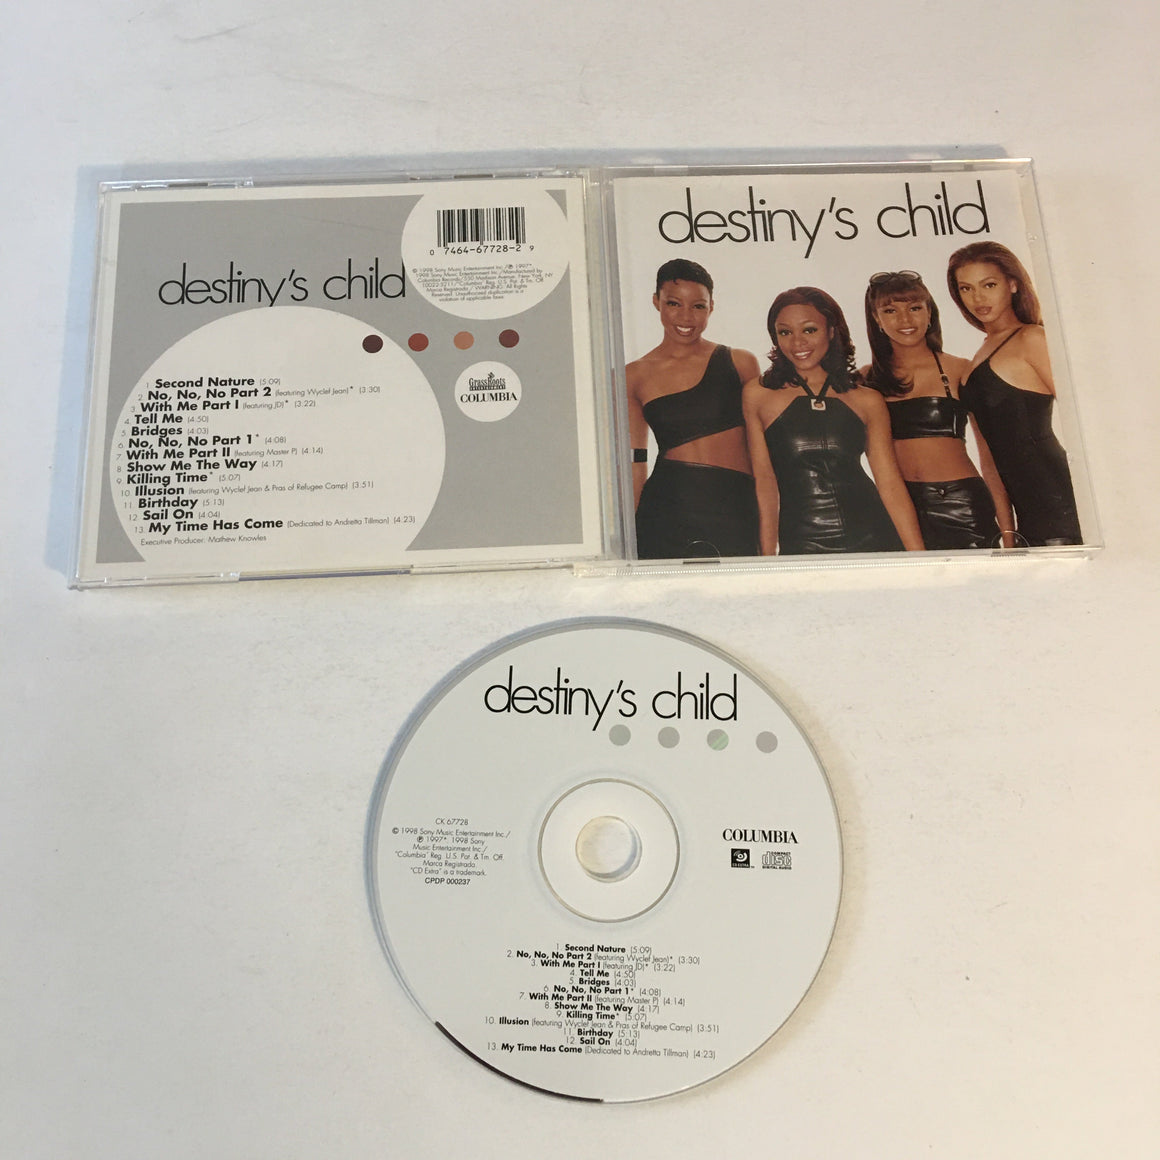 Destiny's Child Destiny's Child Used CD VG+\VG+